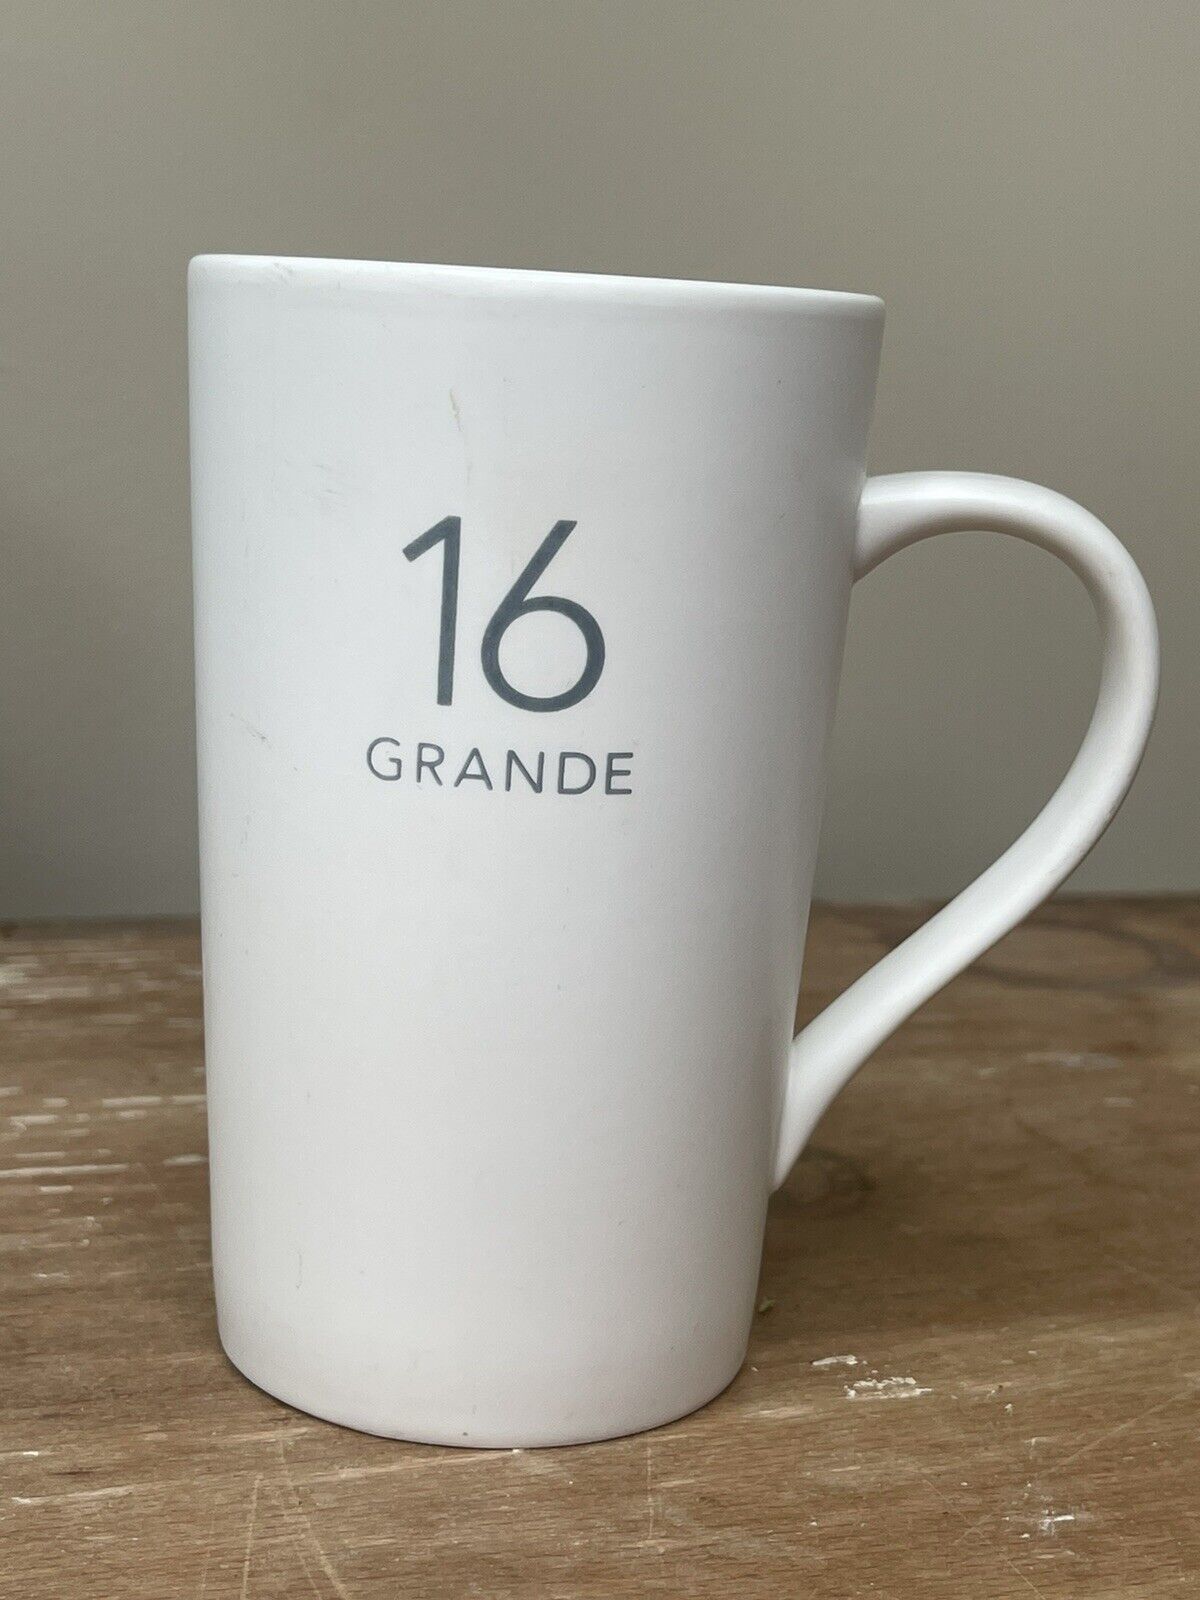 *Starbucks Coffee 2011 White Ceramic Gray Letters 16 Grande Ounces Mug Cup 16 oz